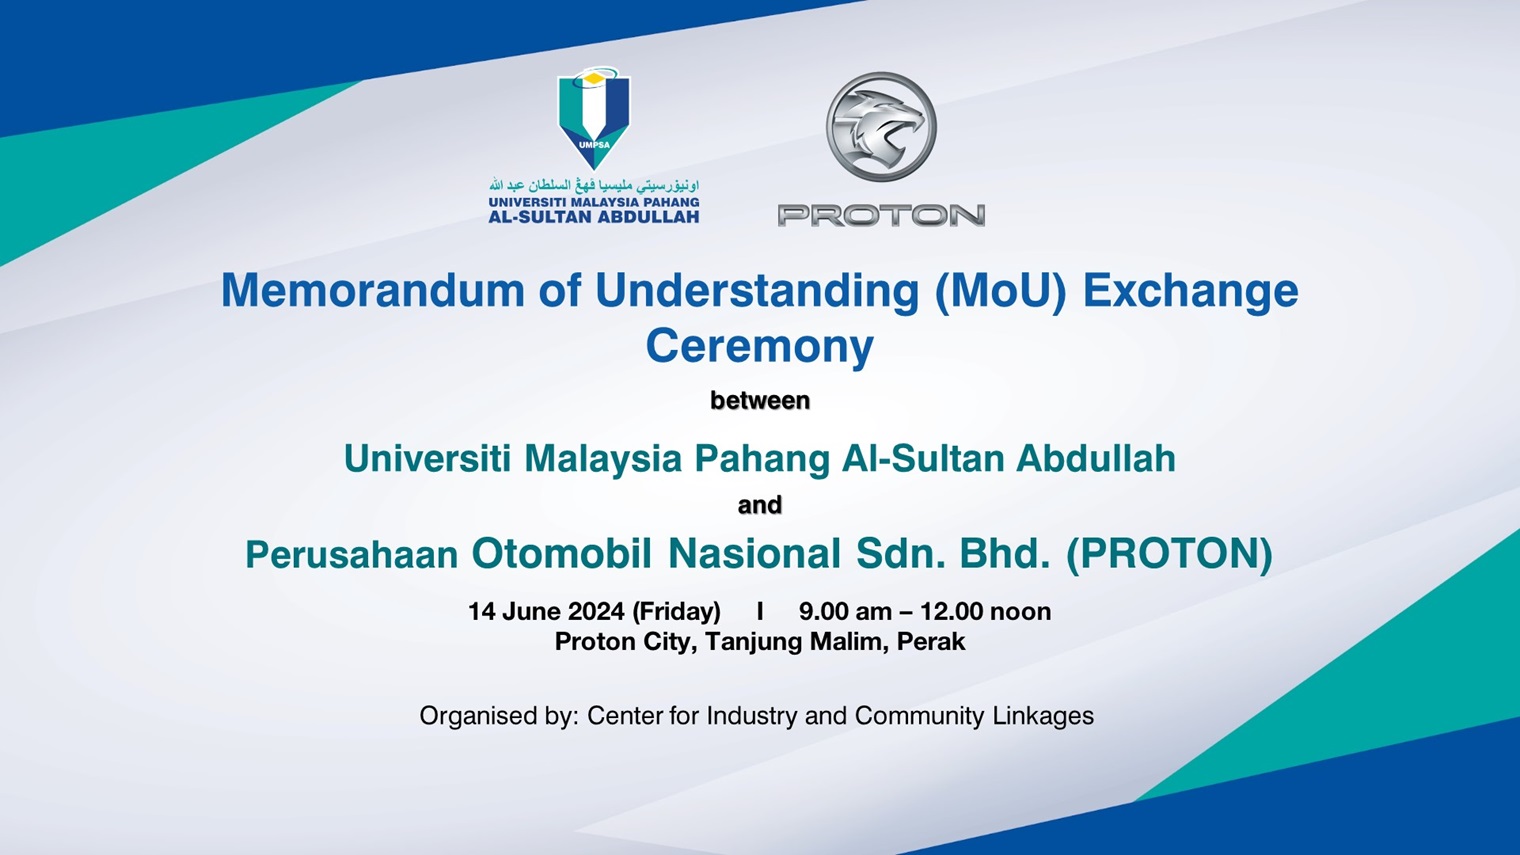 MEMORANDUM OF UNDERSTANDING (MOU) EXCHANGE CEREMONY BETWEEN UNIVERSITI MALAYSIA PAHANG AL-SULTAN ABDULLAH AND PERUSAHAAN OTOMOBIL NASIONAL SDN BHD (PROTON)